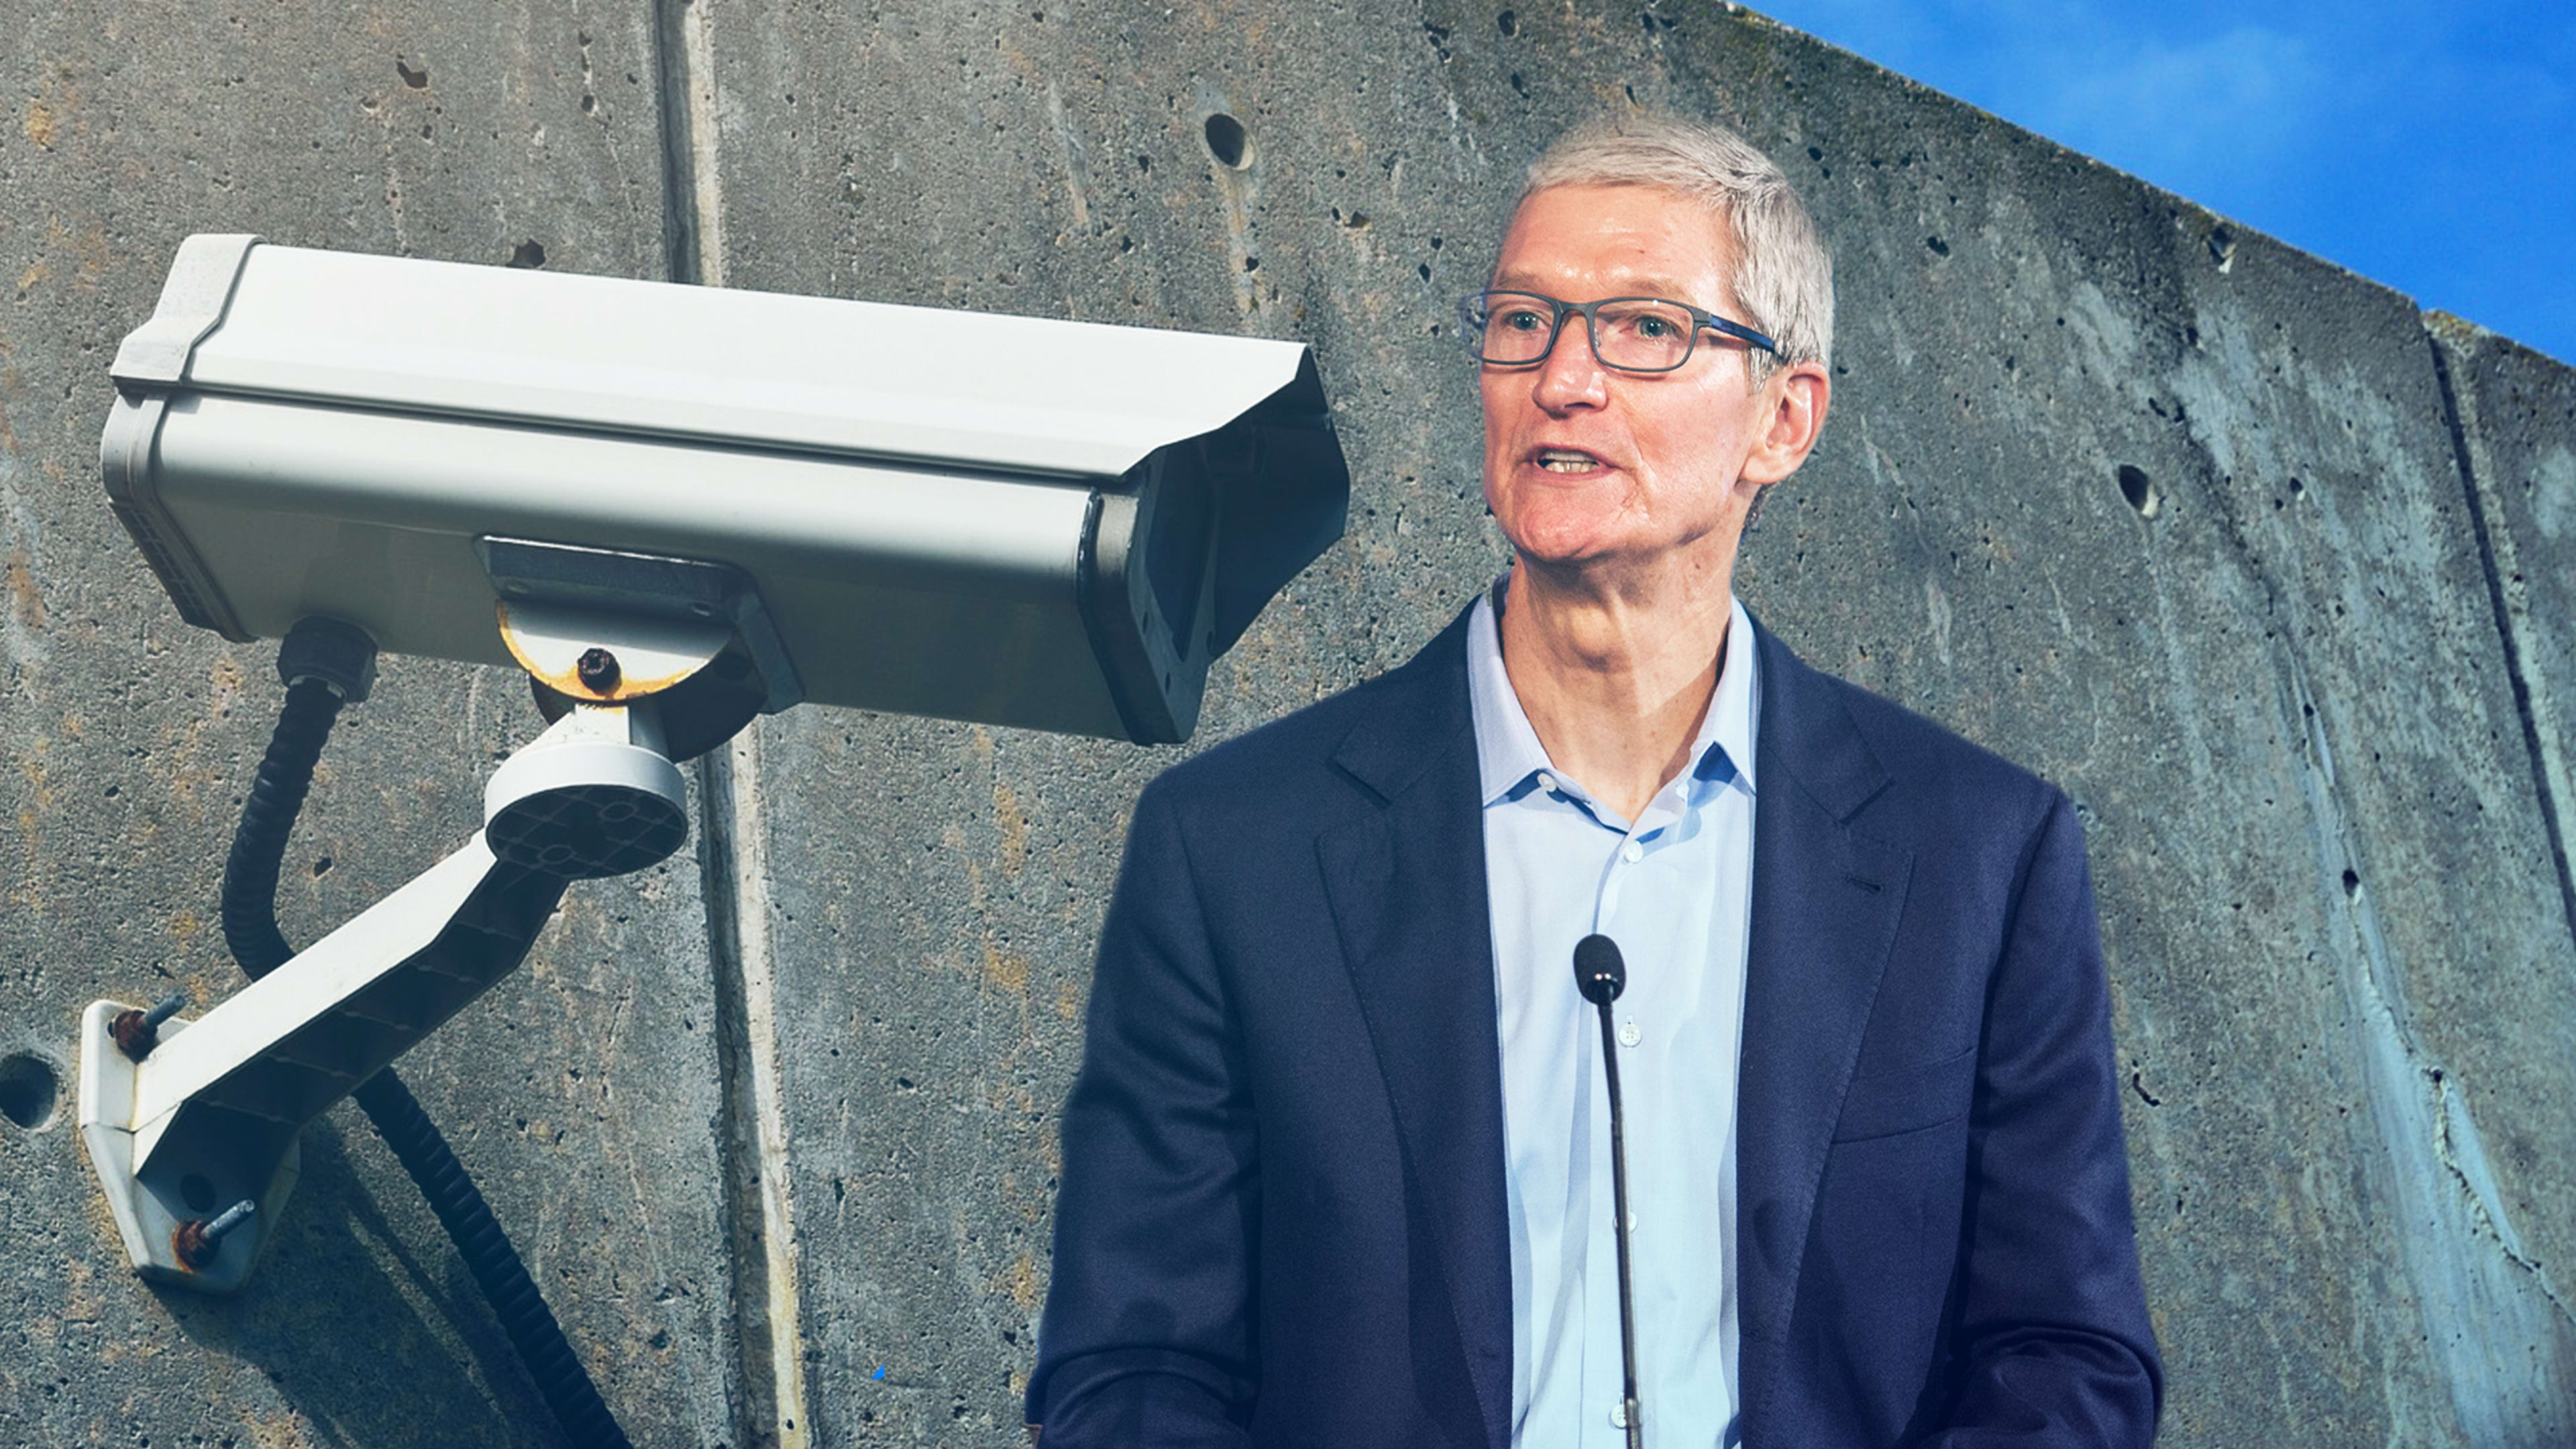 Apple’s inconvenient truth: It’s part of the data surveillance economy